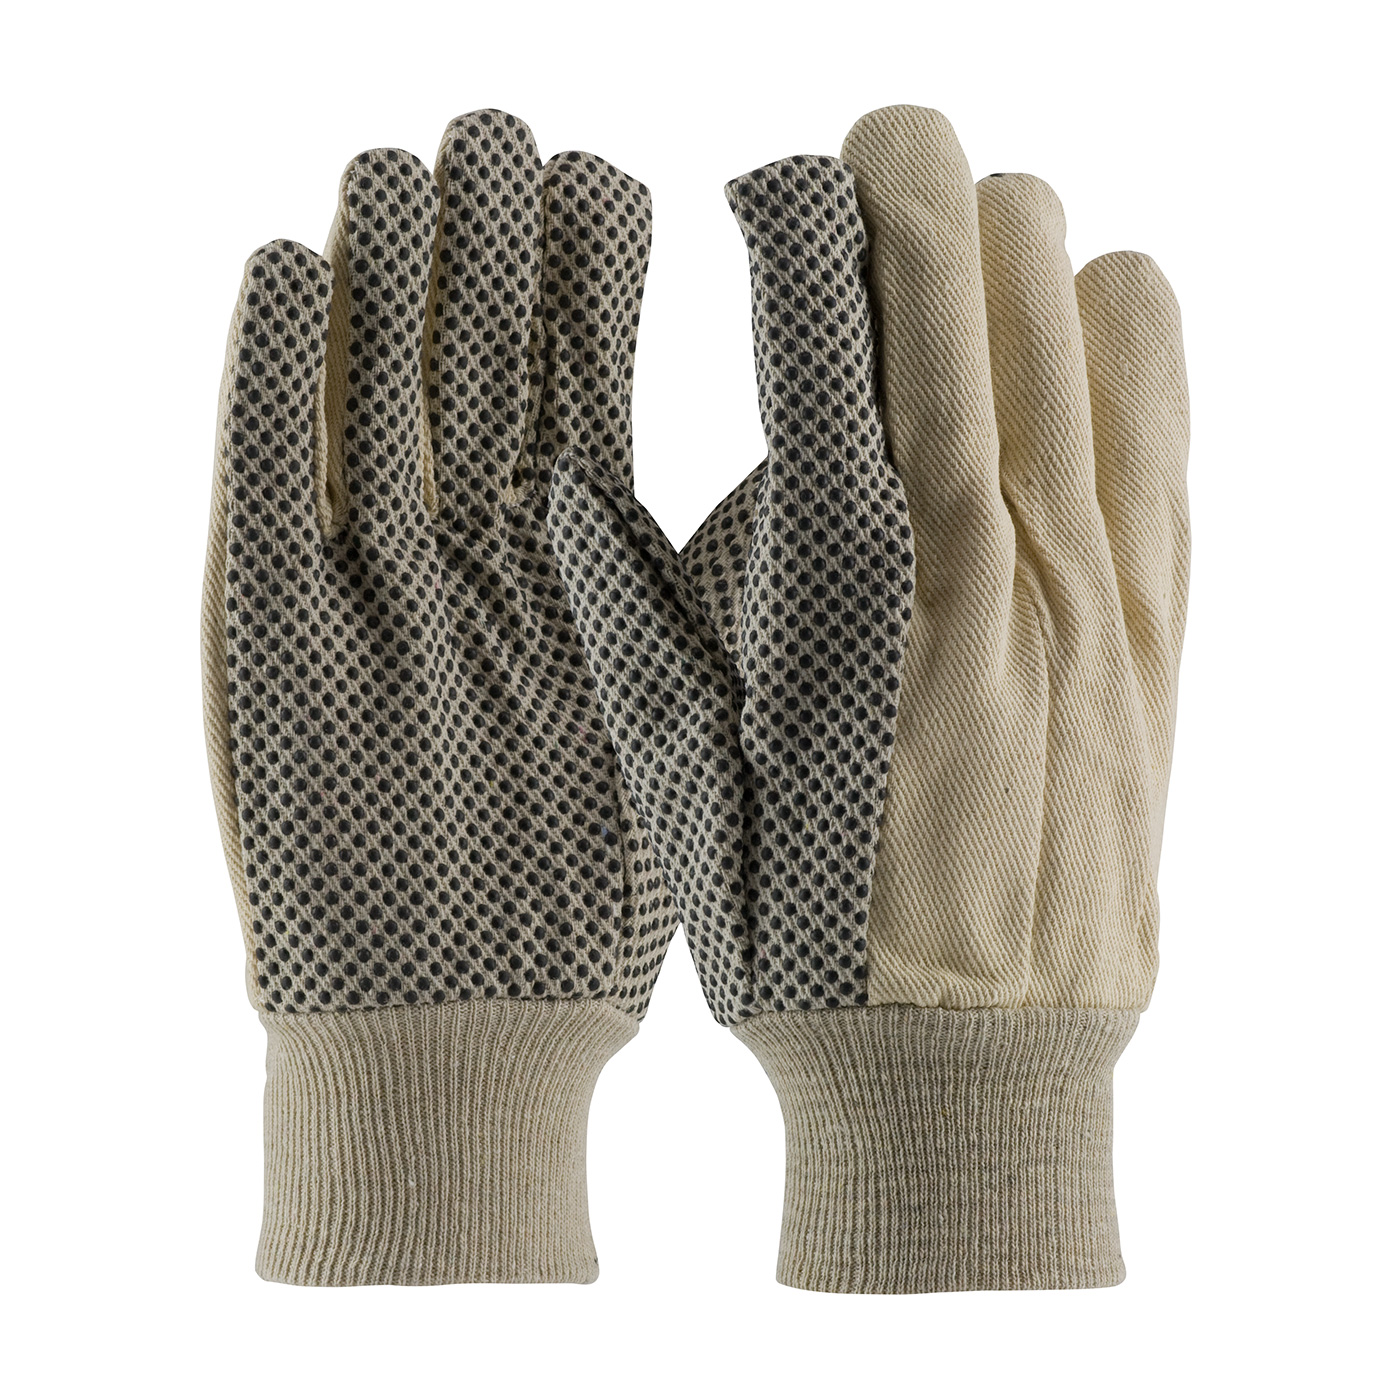 PIP Men's Premium Grade Natural 10 oz. PVC Dot Grip Cotton Canvas Gloves